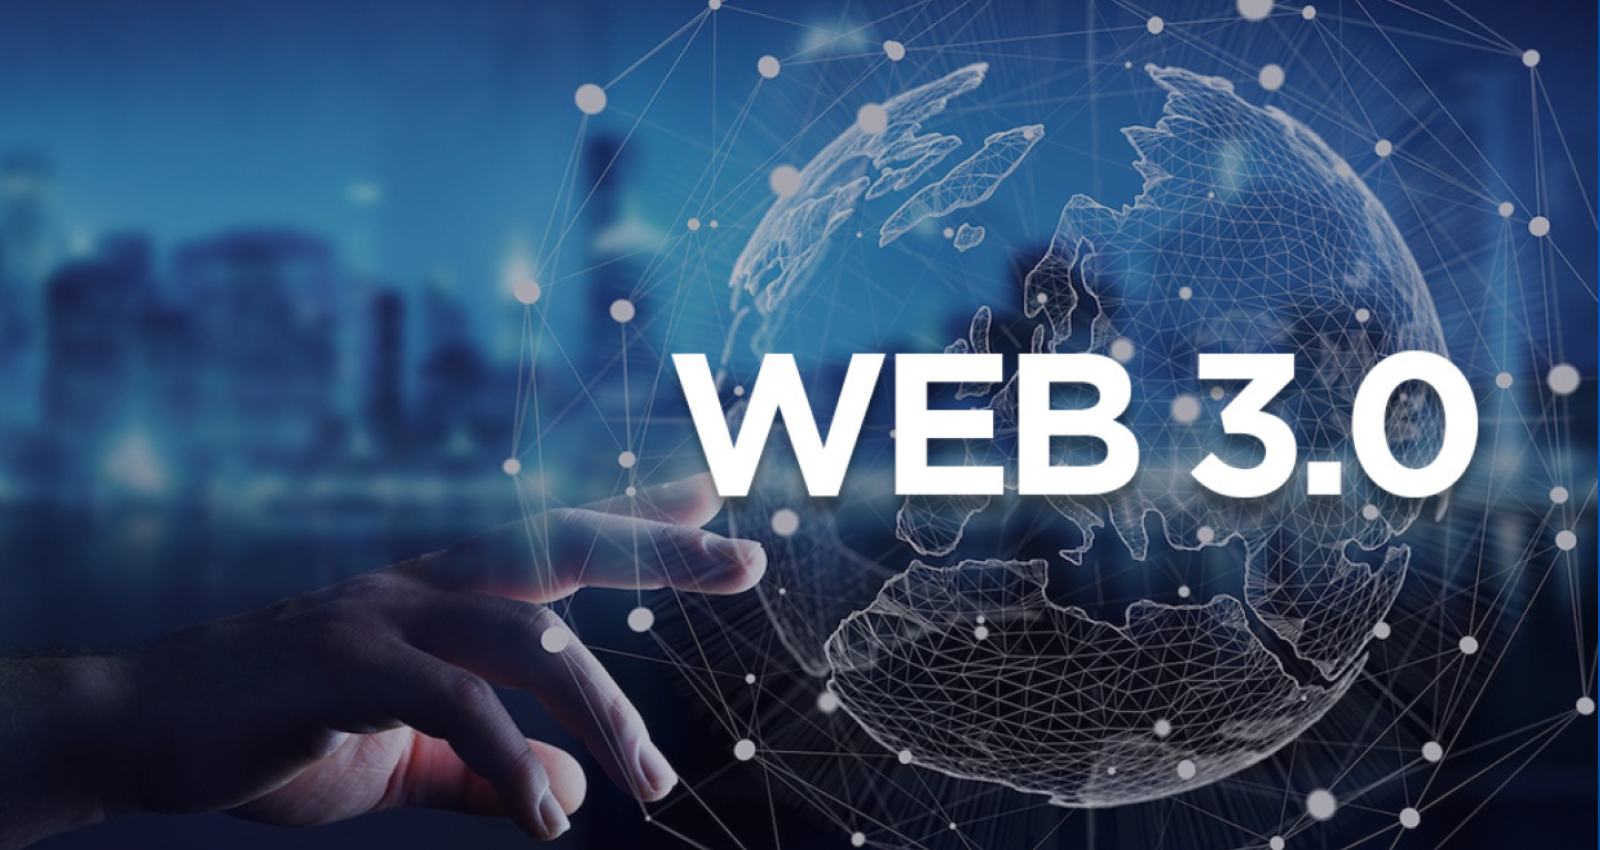 Web 3.0, Semantic web, Decentralized web, World Wide Web, Web 1.0 (the static web) and Web 2.0 (the social web).